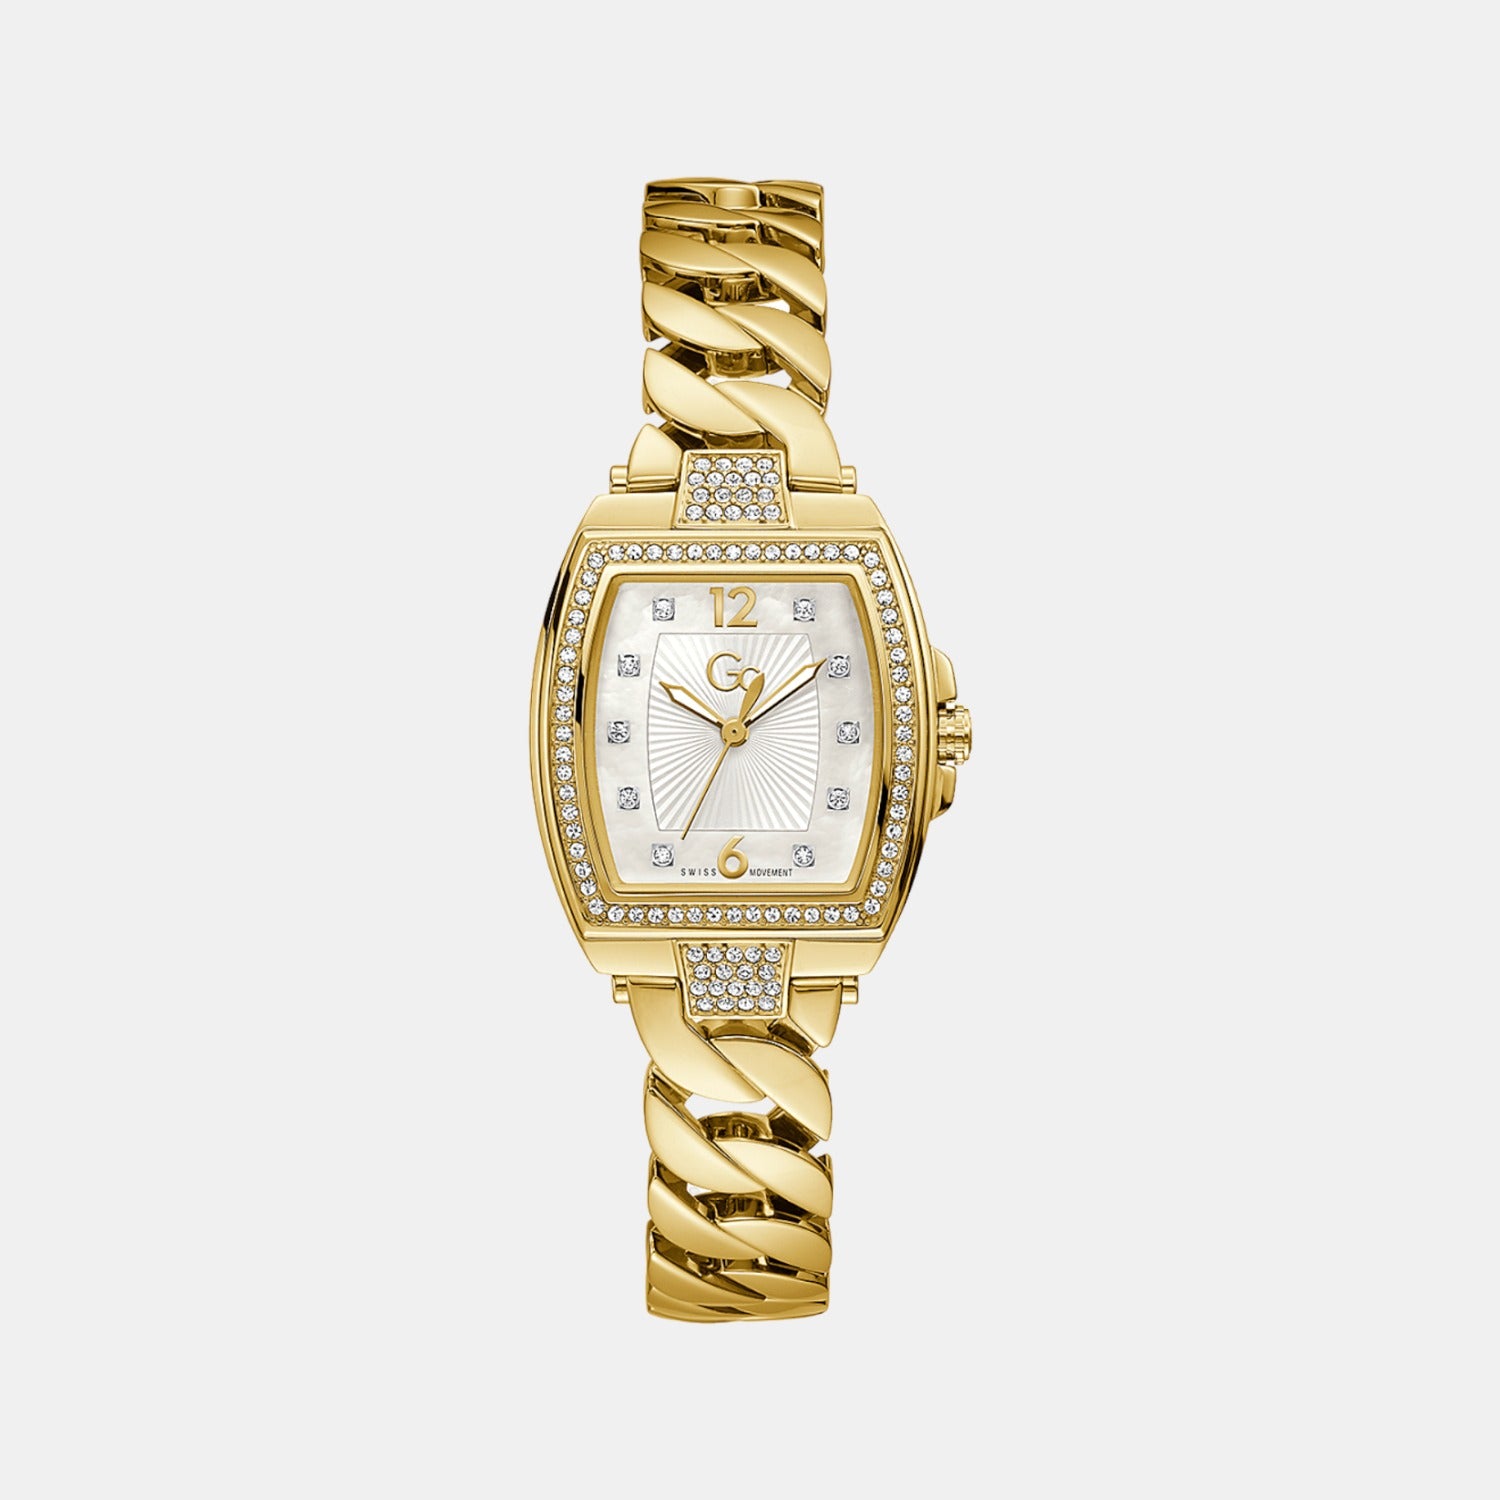 Pearl Dial Bracelet Watch | Calvin Klein